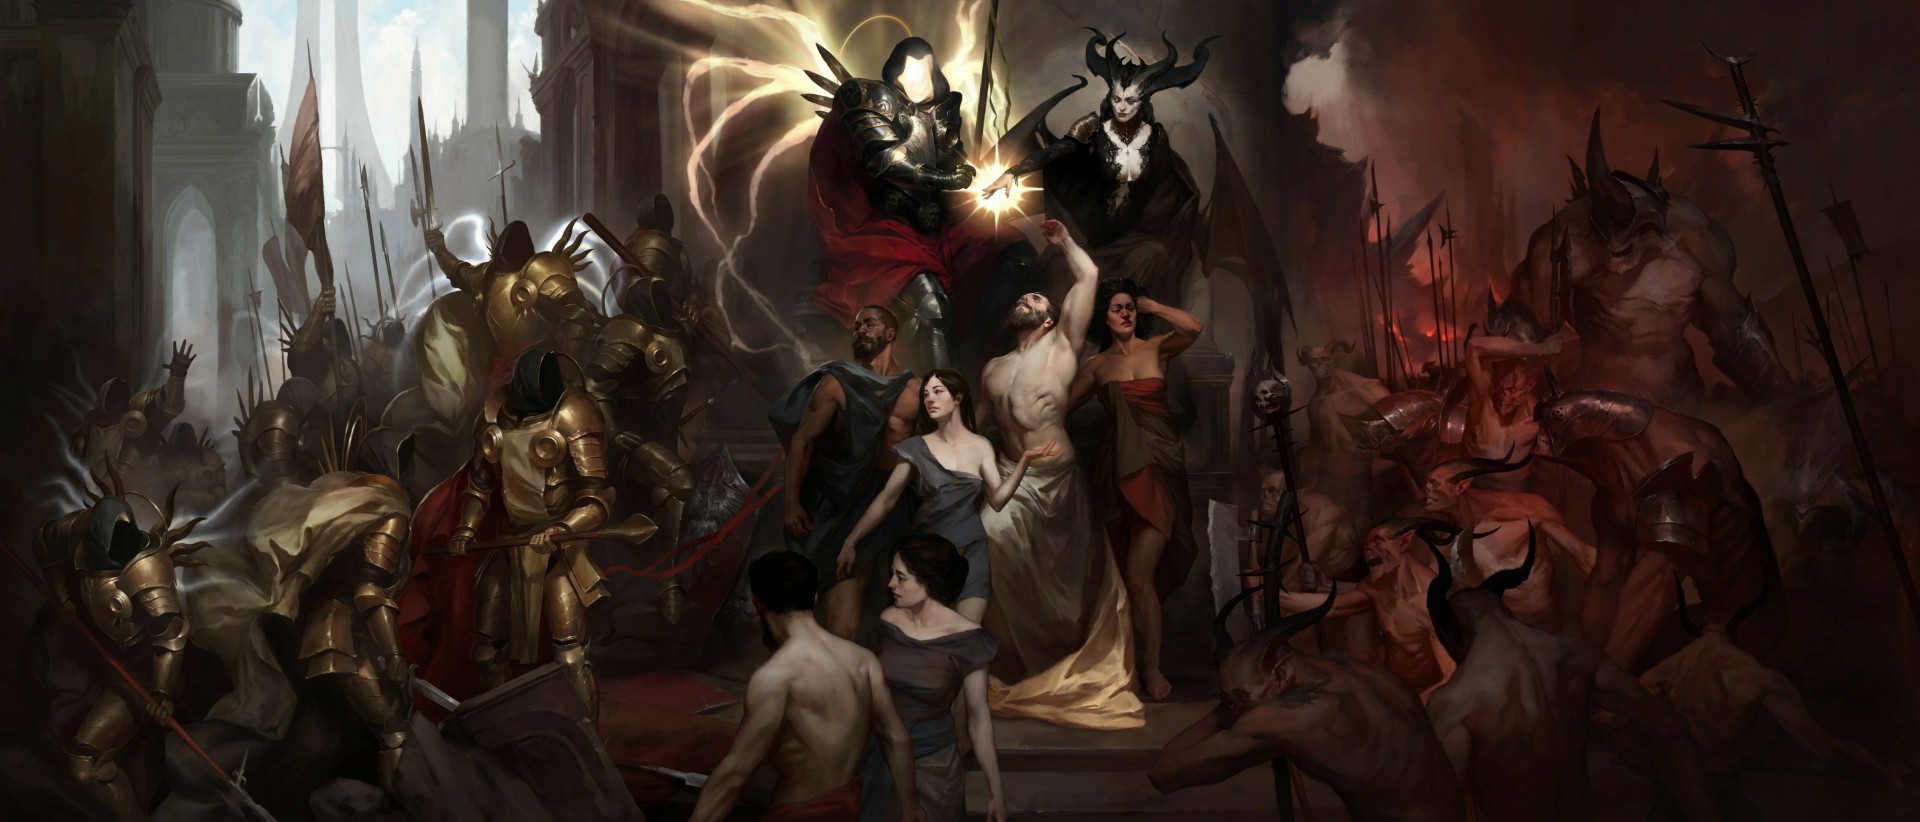 Скриншот Diablo IV - Ultimate Edition Xbox One & Xbox Series X|S